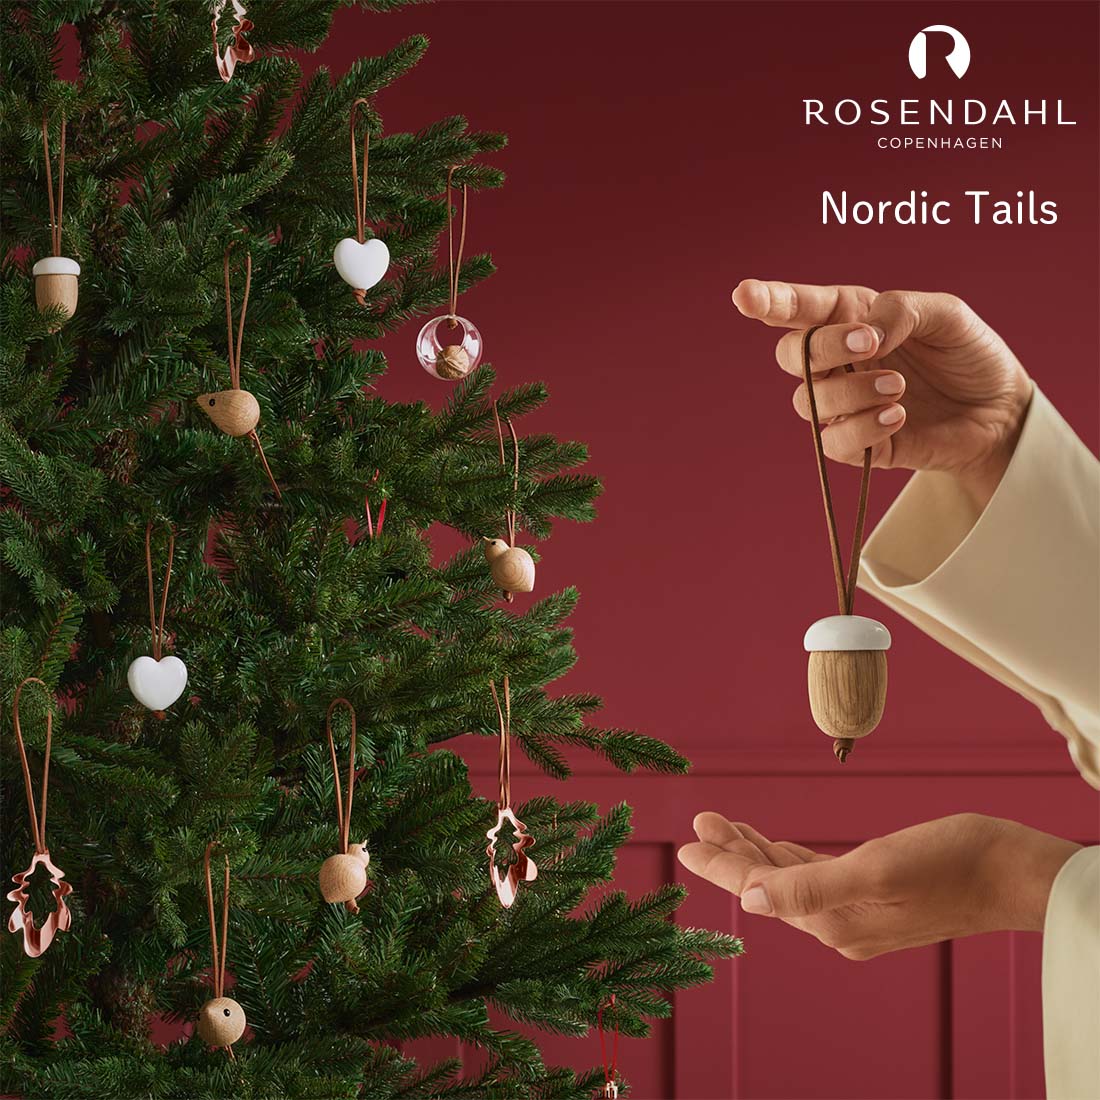 ROSENDAHL COPENHAGEN Nordic Tails クリスマス オーナメント ローゼンダール コペンハーゲン ノルディックテイルズ フクロウ スパロー ドングリ バスケット 北欧 デン